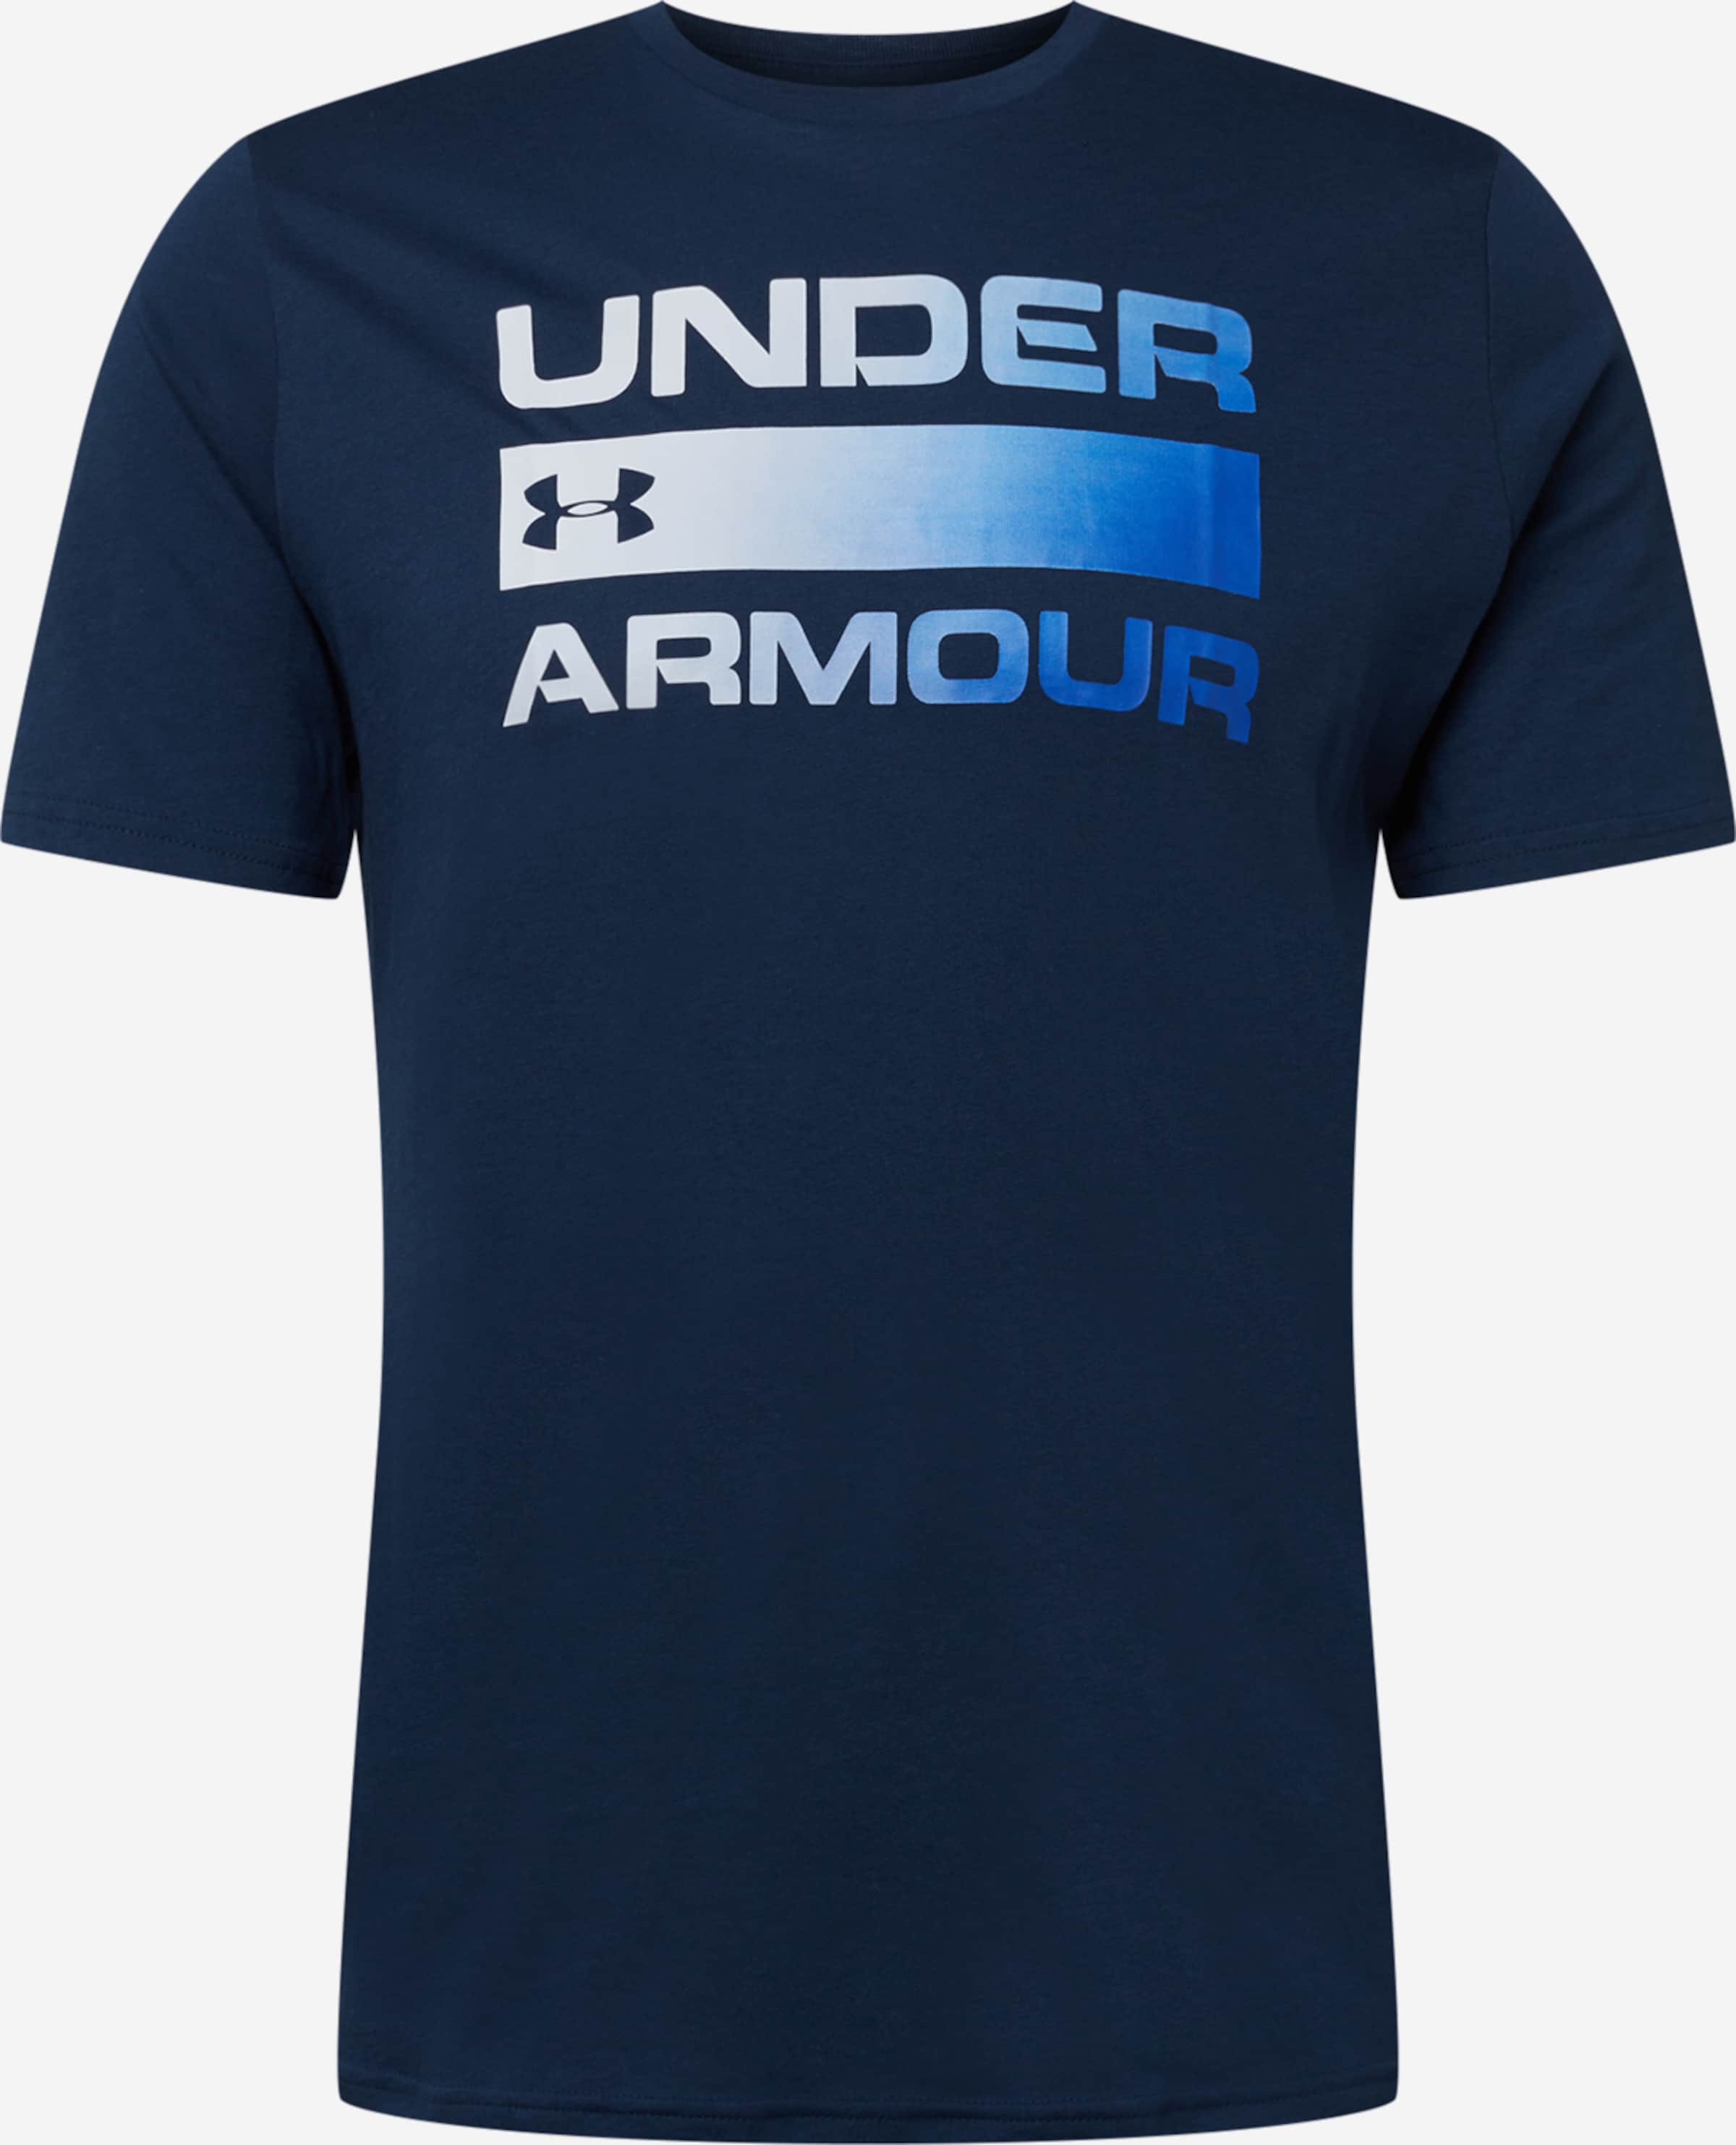 UNDER ARMOUR Camiseta funcional Issue' en Azul, Navy | ABOUT YOU